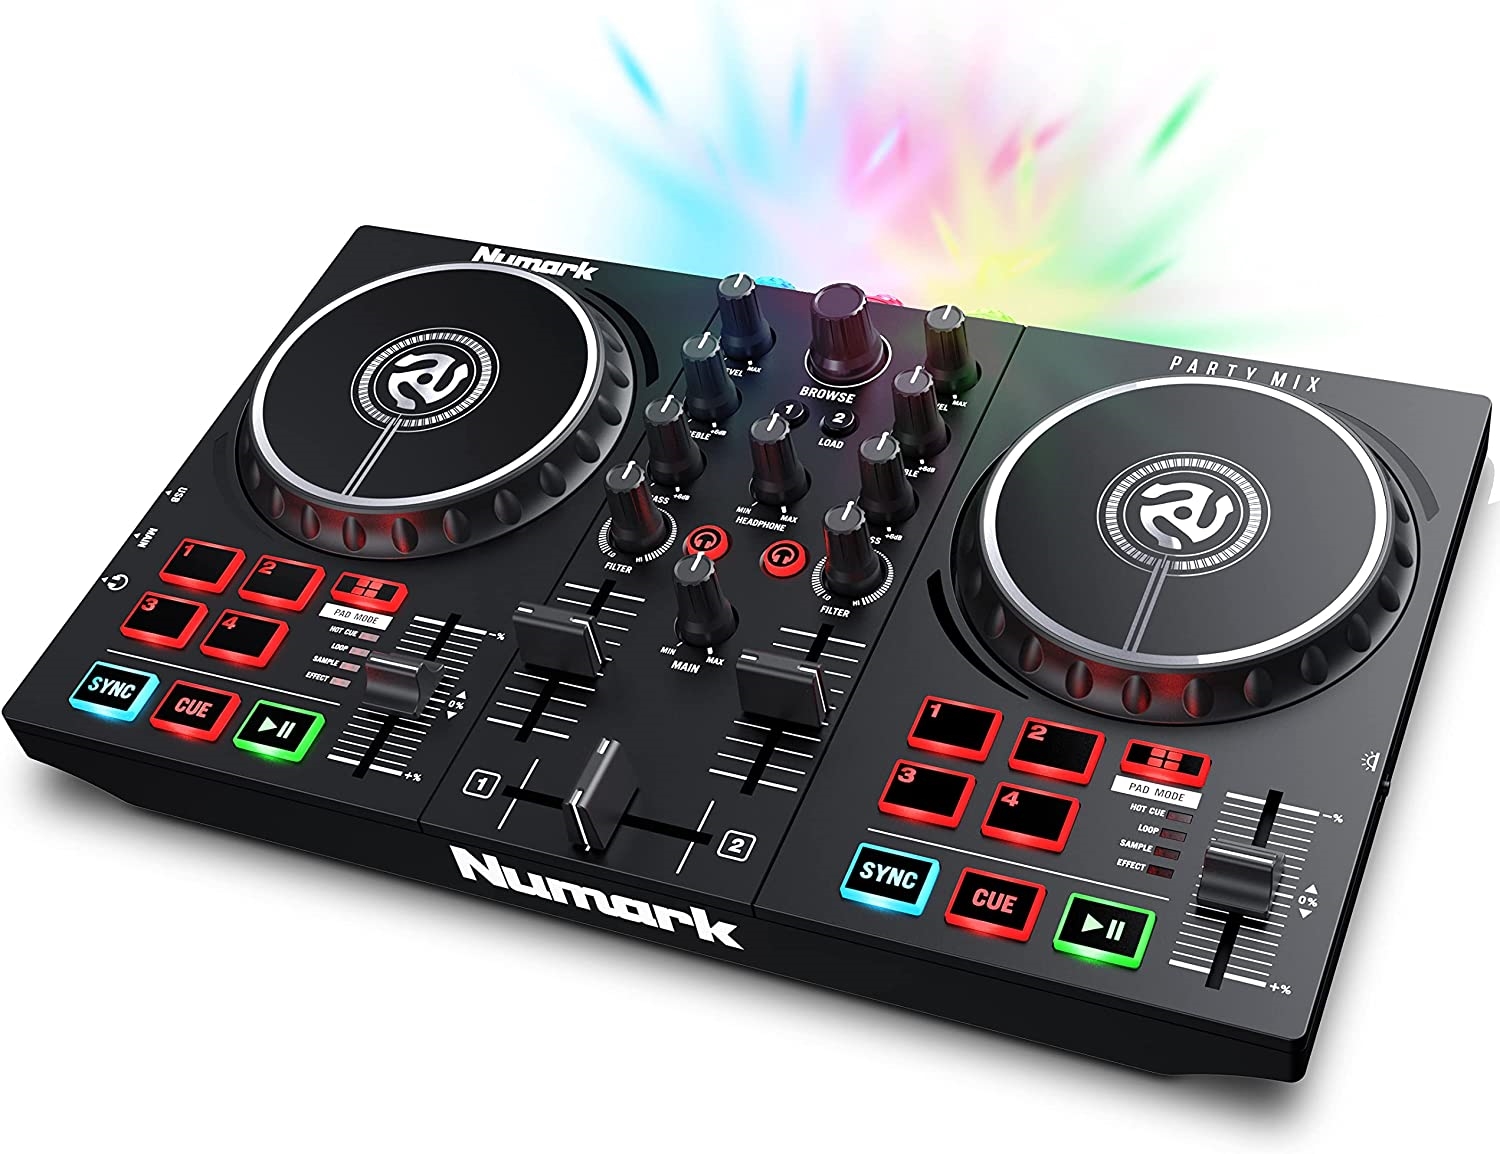 Numark Party Mix II DJ Controller for iPad | DeviceDaily.com